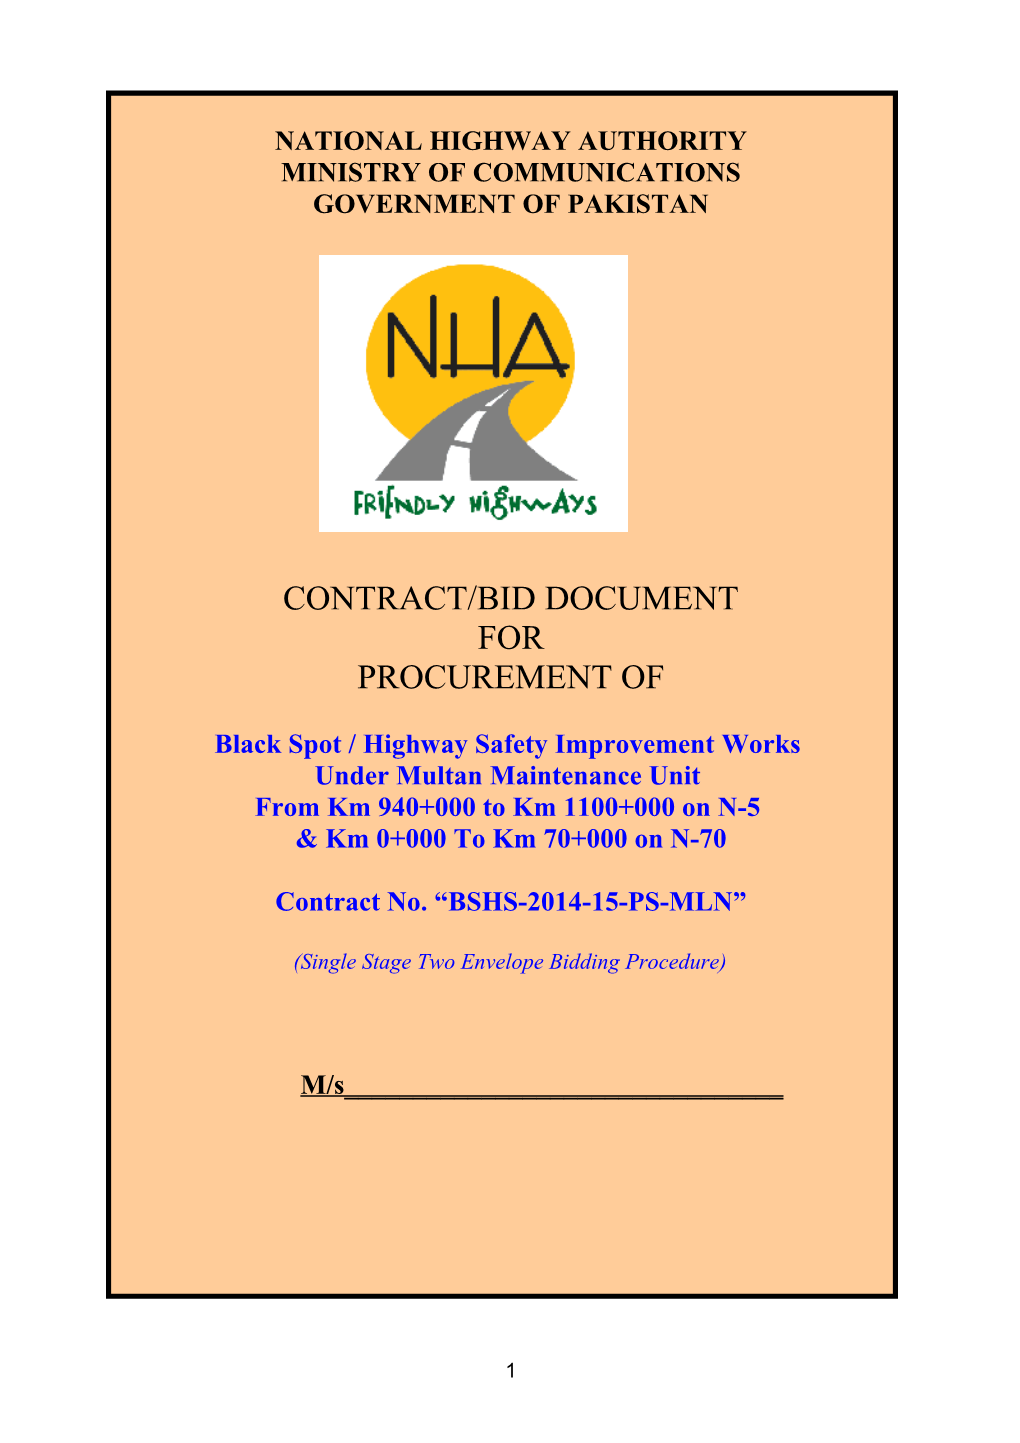 Standard Form of Bidding Documents for Procurement of Civil Works